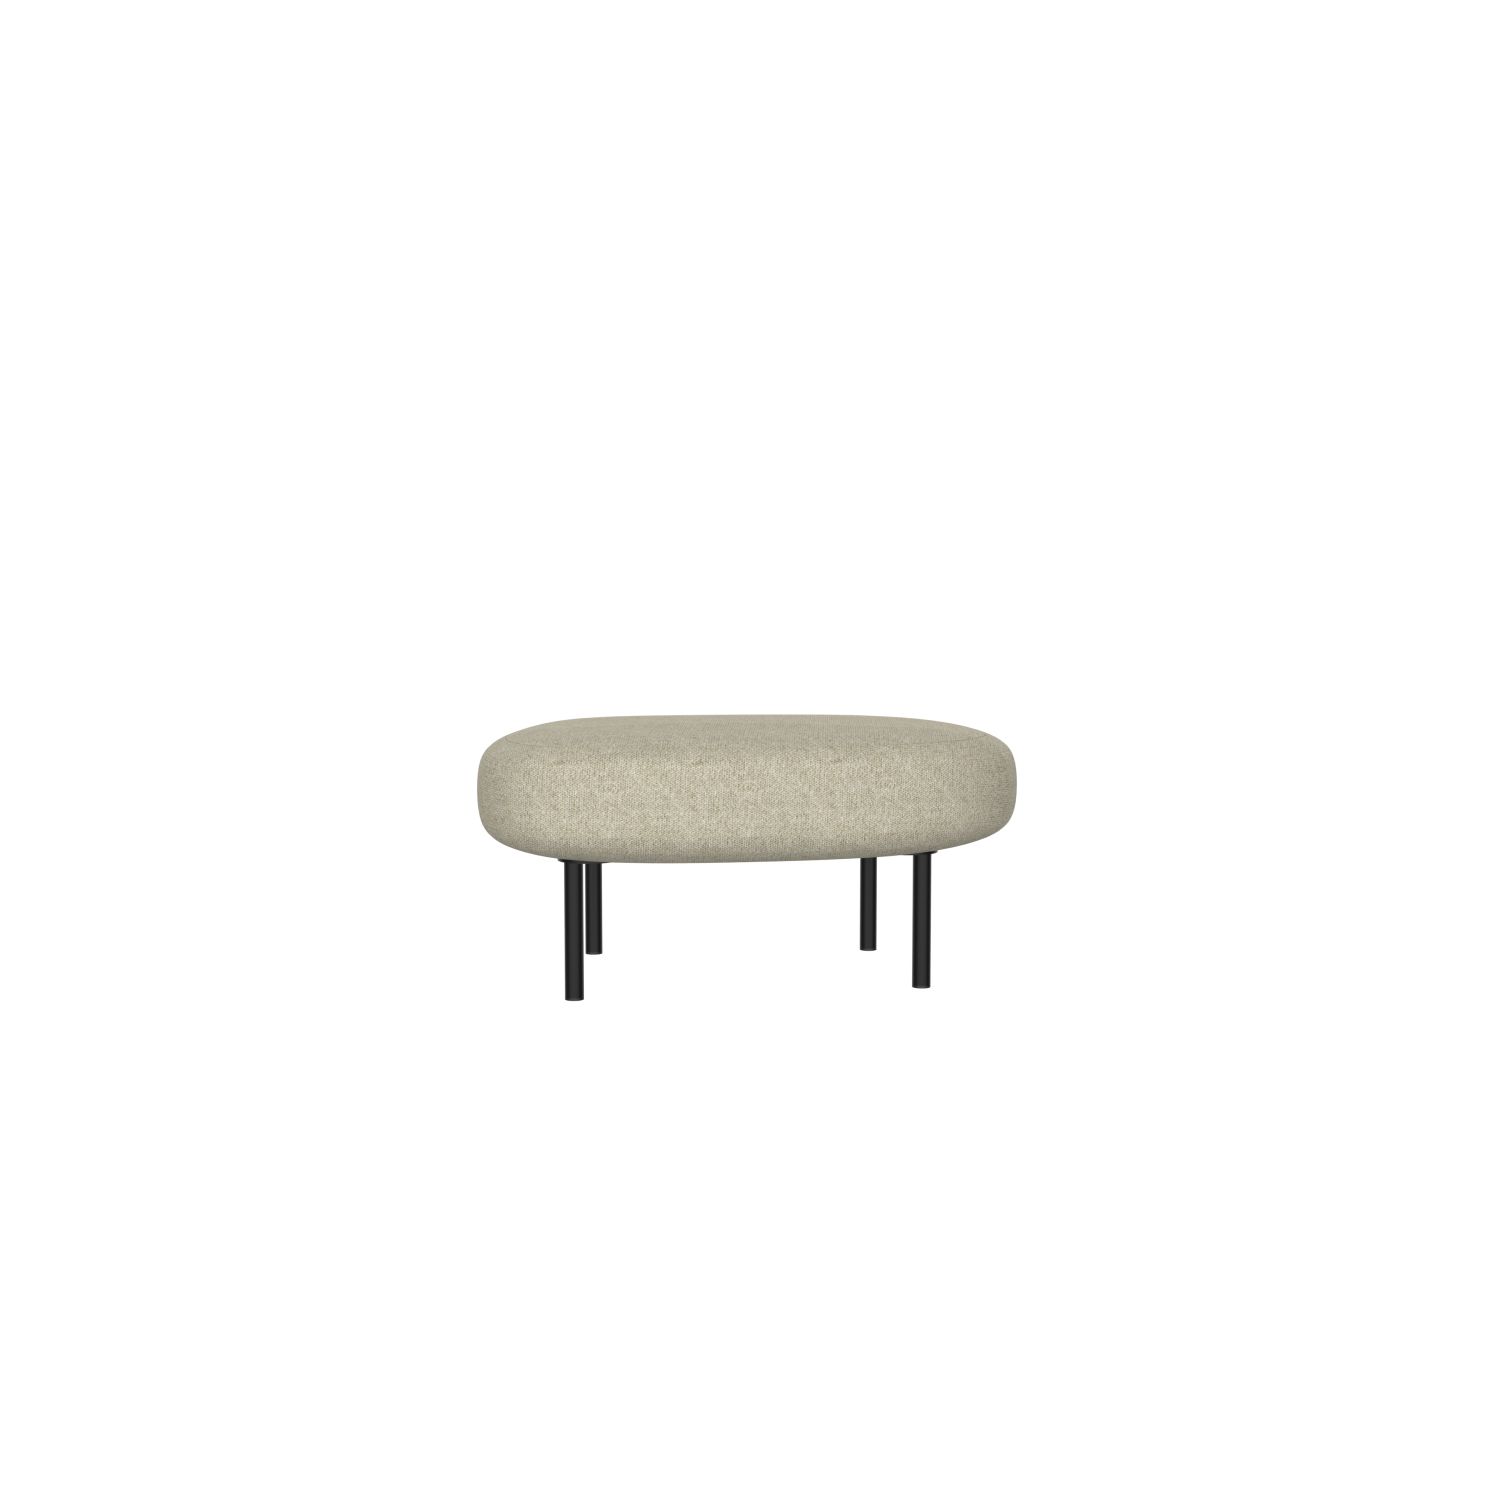 lensvelt studio stefan scholten sofa ottoman 90x70 cm middle lounge part moss stone grey 11 frame black ral9005